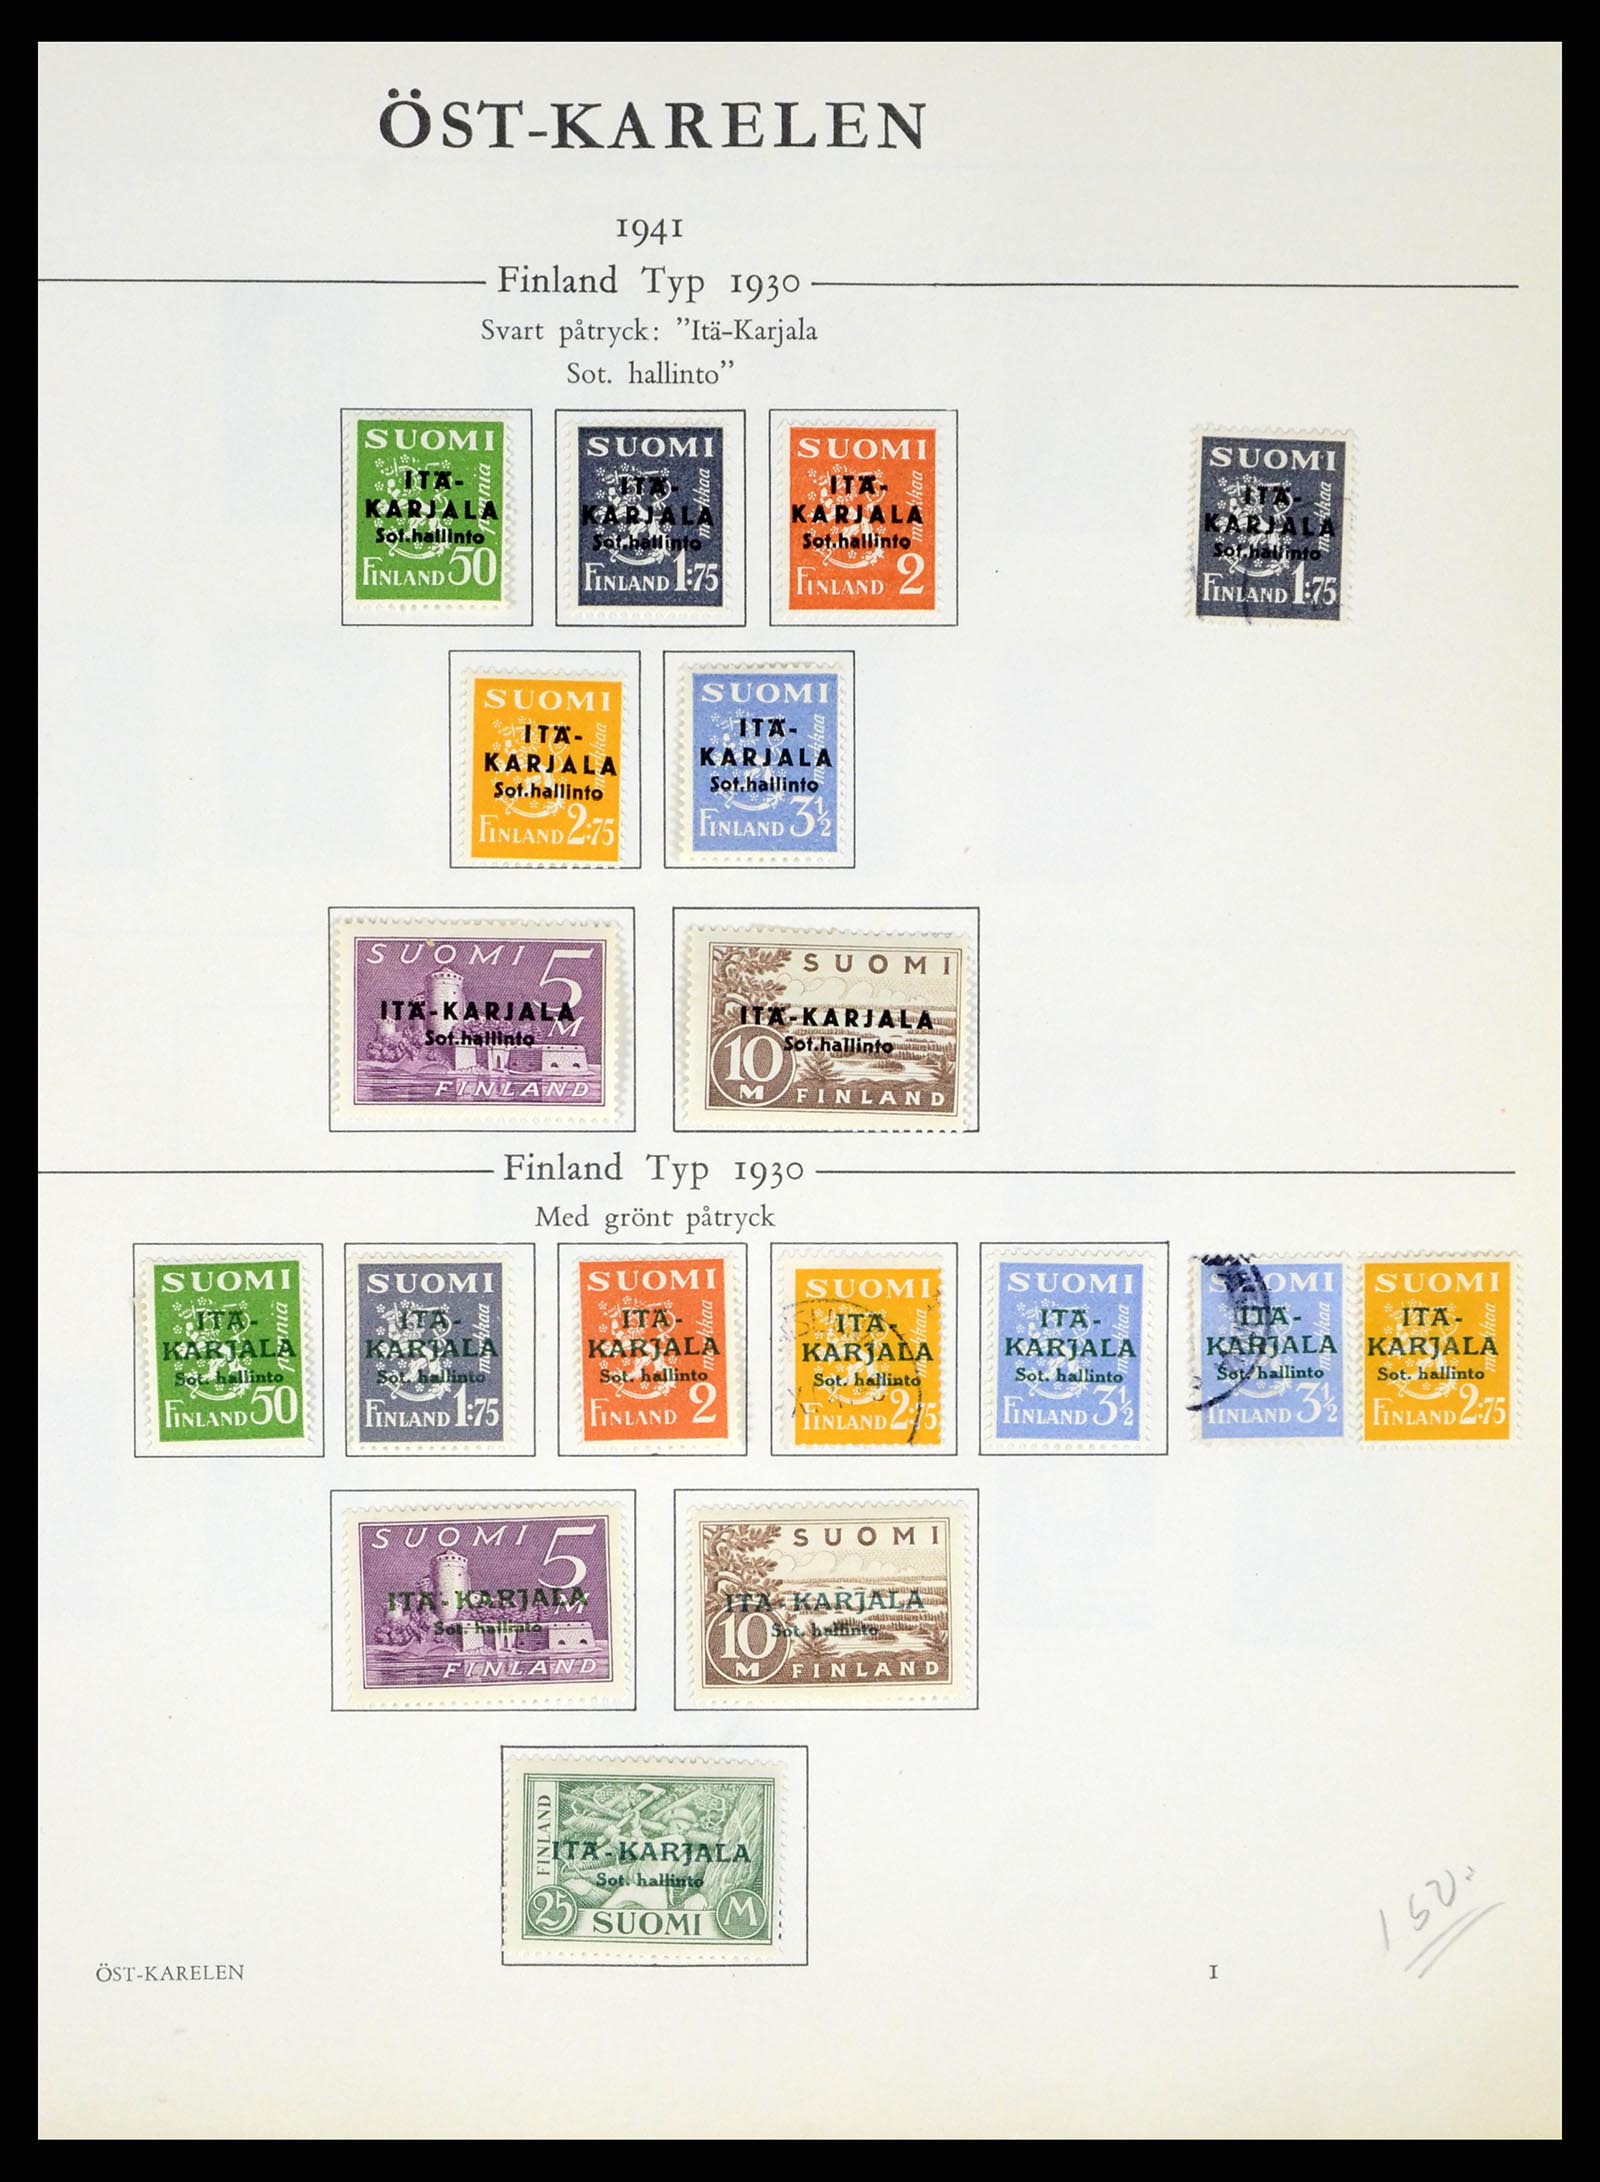 37387 229 - Stamp collection 37387 Scandinavia 1851-1960.